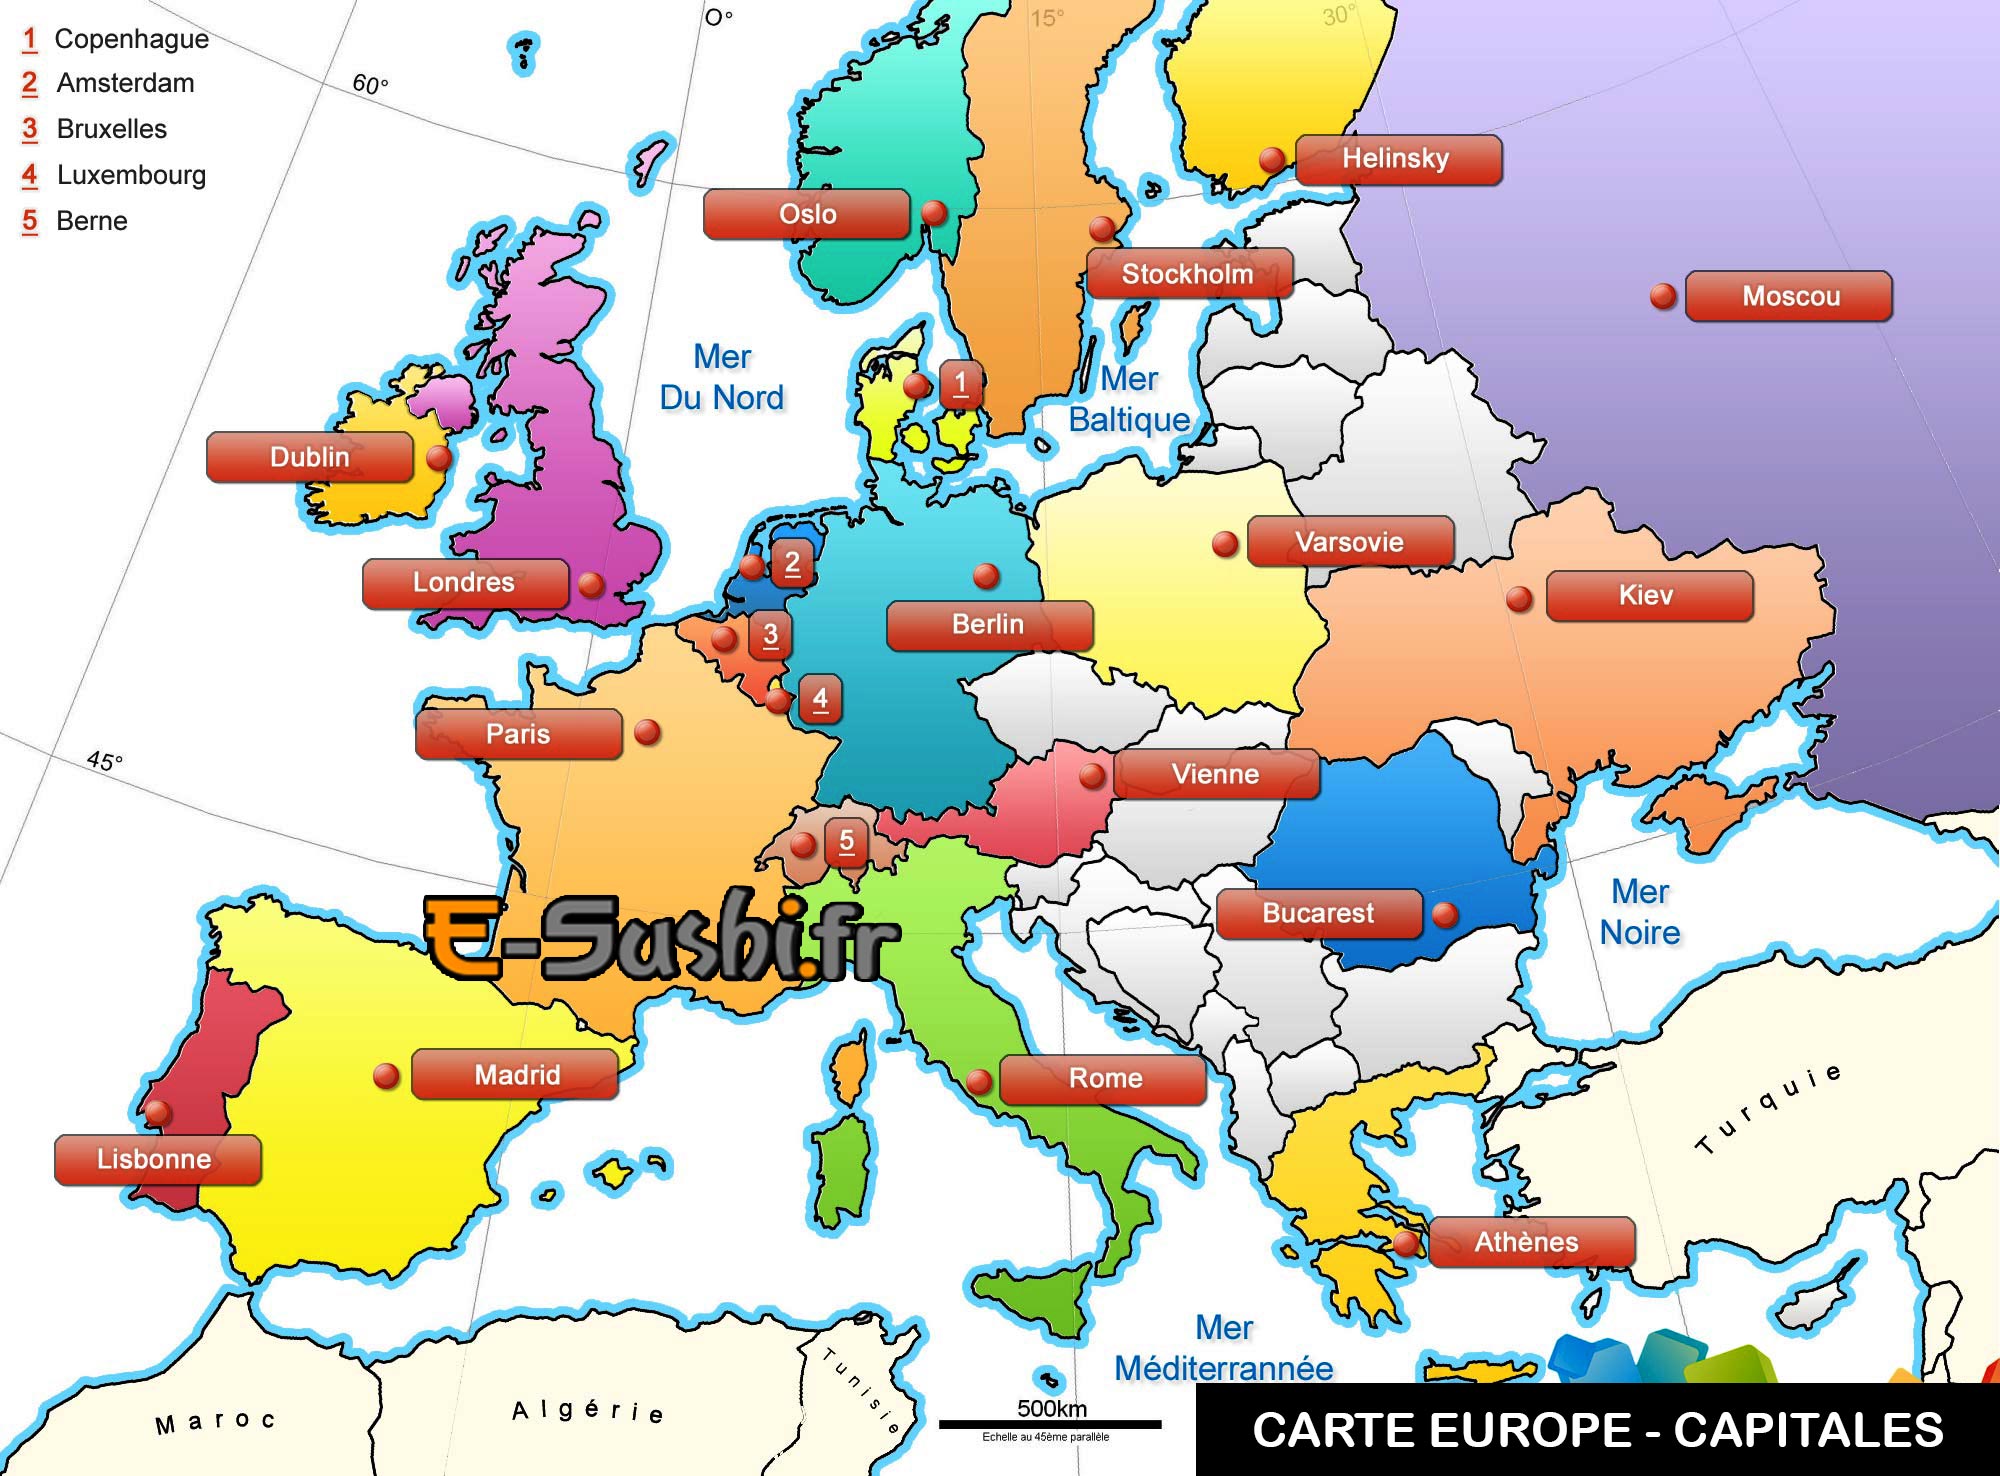 Carte Europe - Capitales